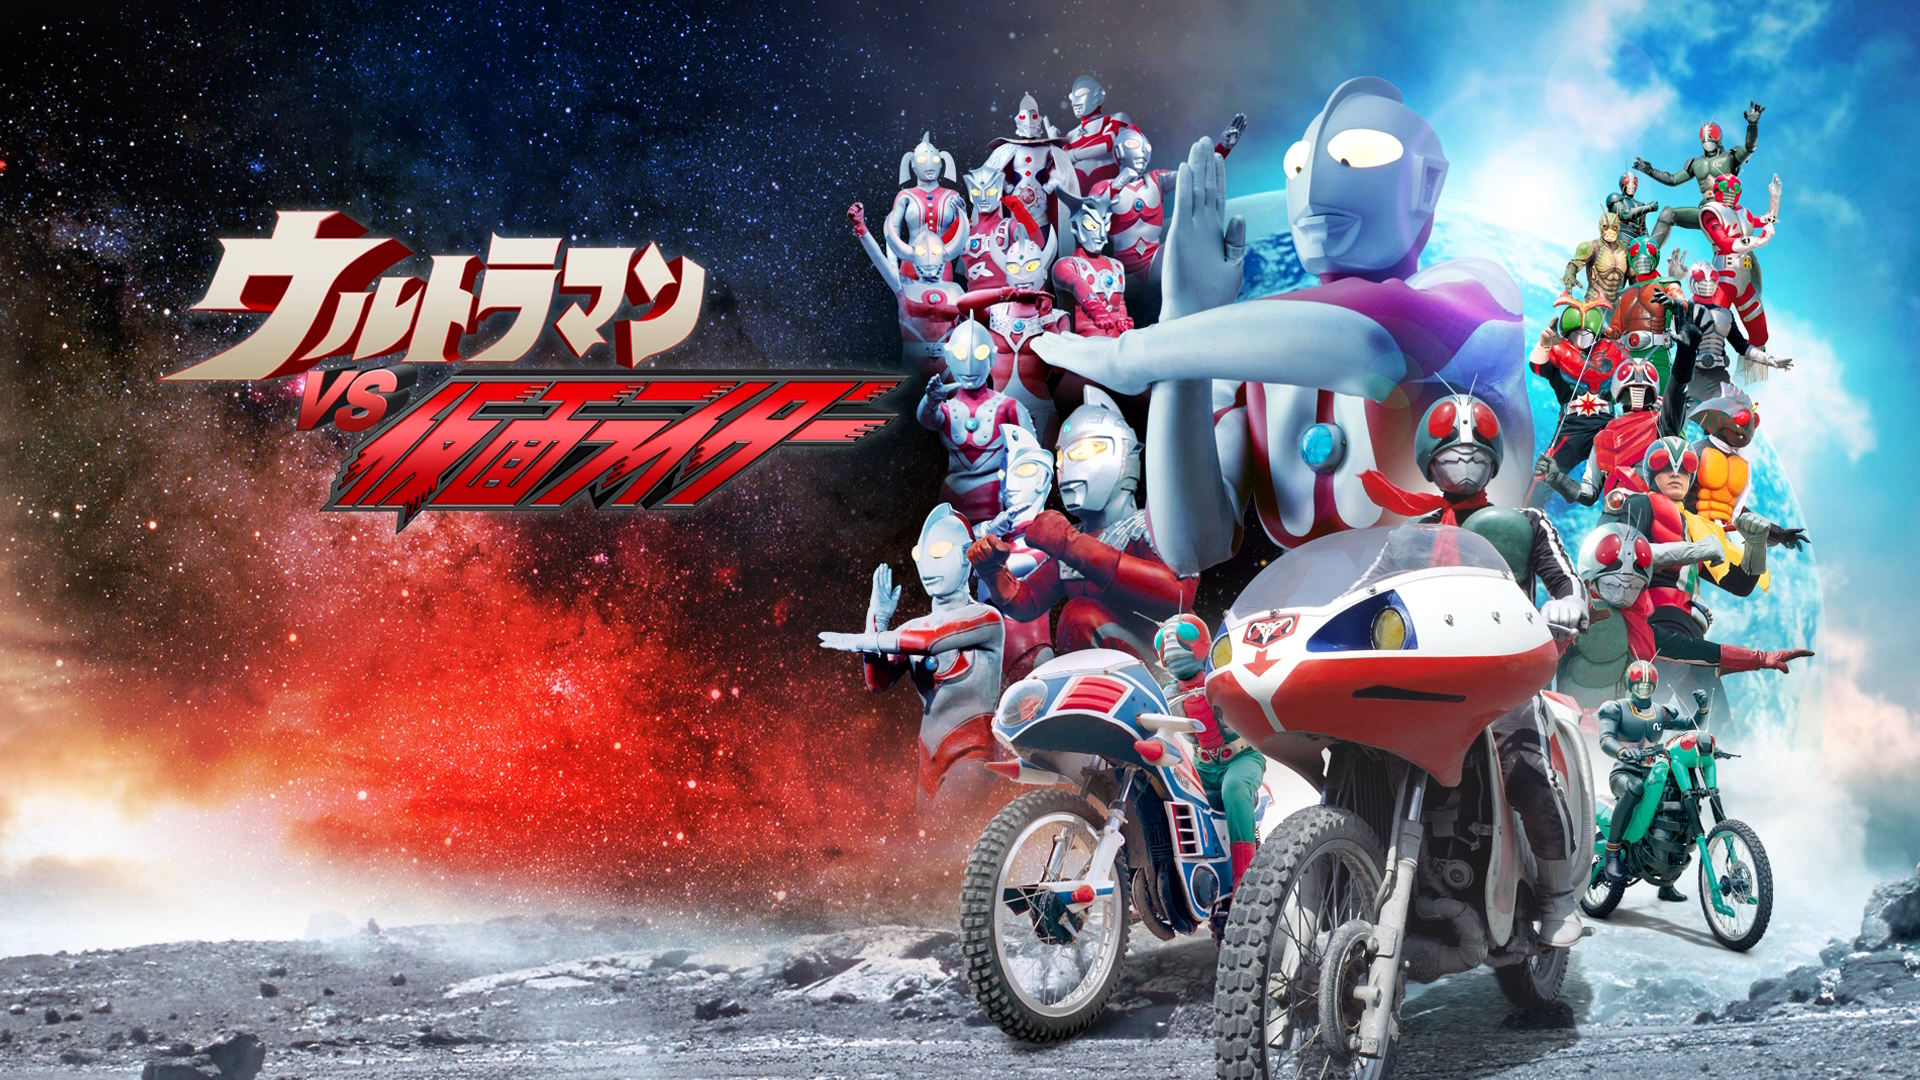 Ultraman Kamen Rider Ultraman Vs Kamen Rider Superhero Mechs Motorcycle Vehicle 1920x1080